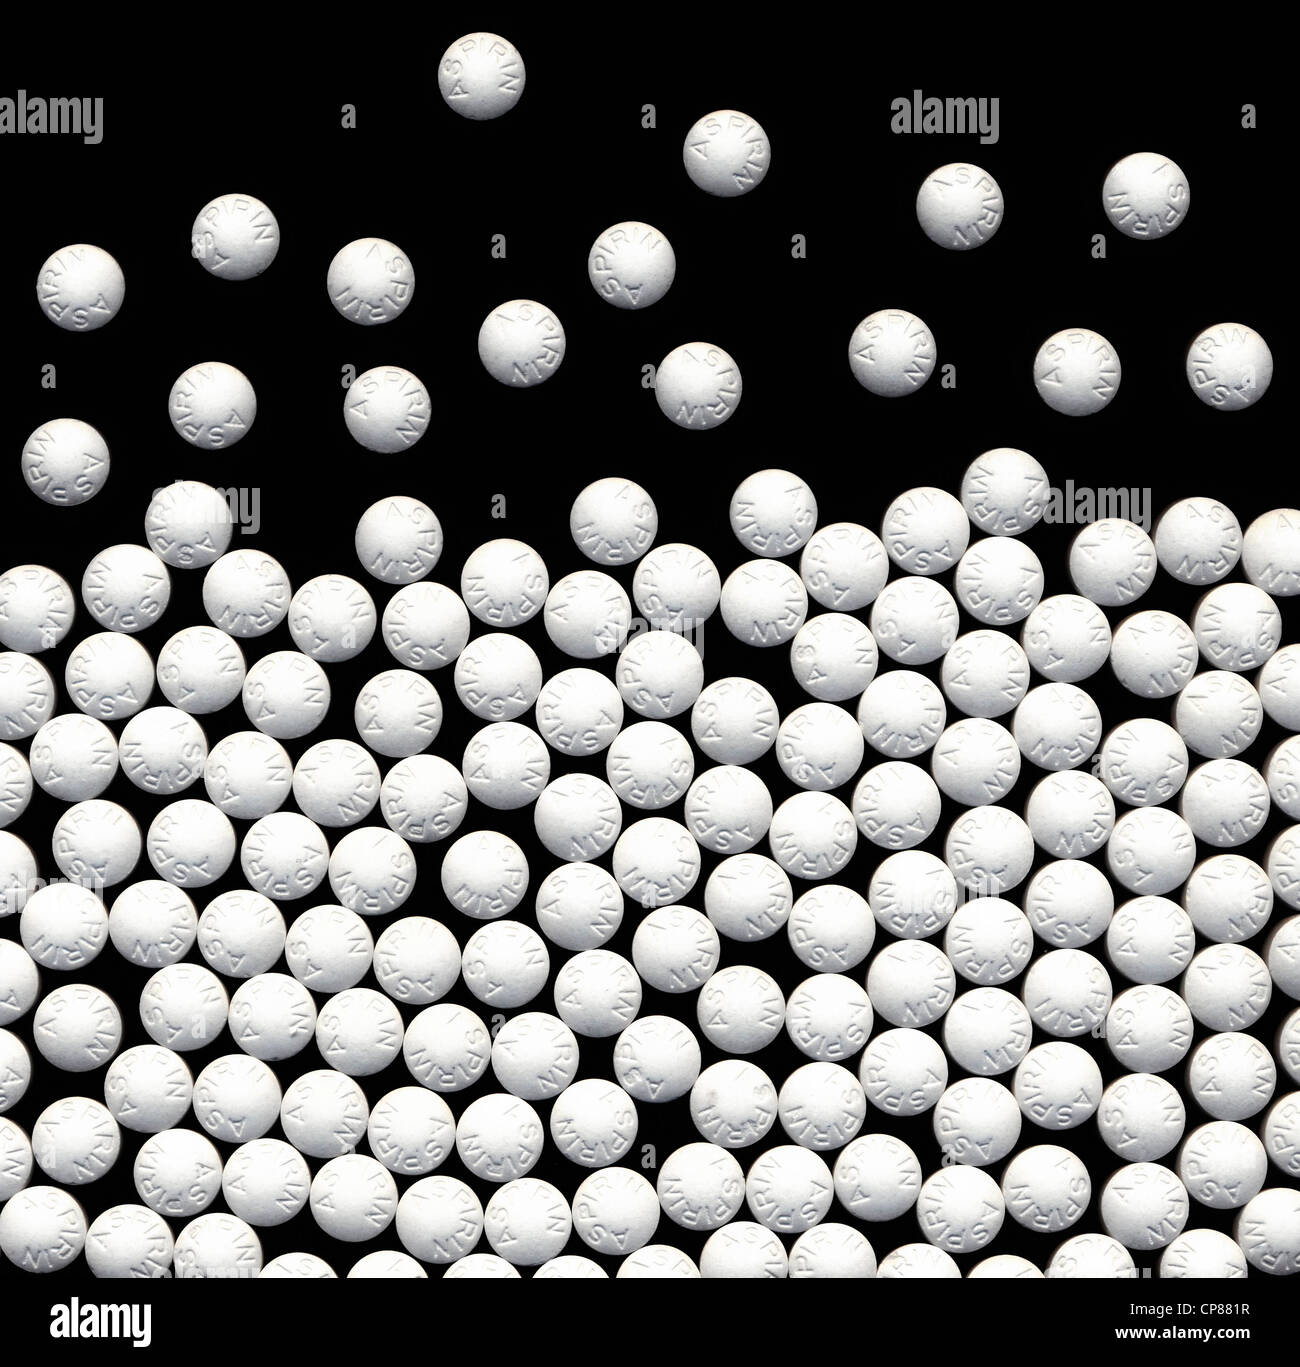 Many Aspirin tablets, Viele Aspirin Tabletten Stock Photo